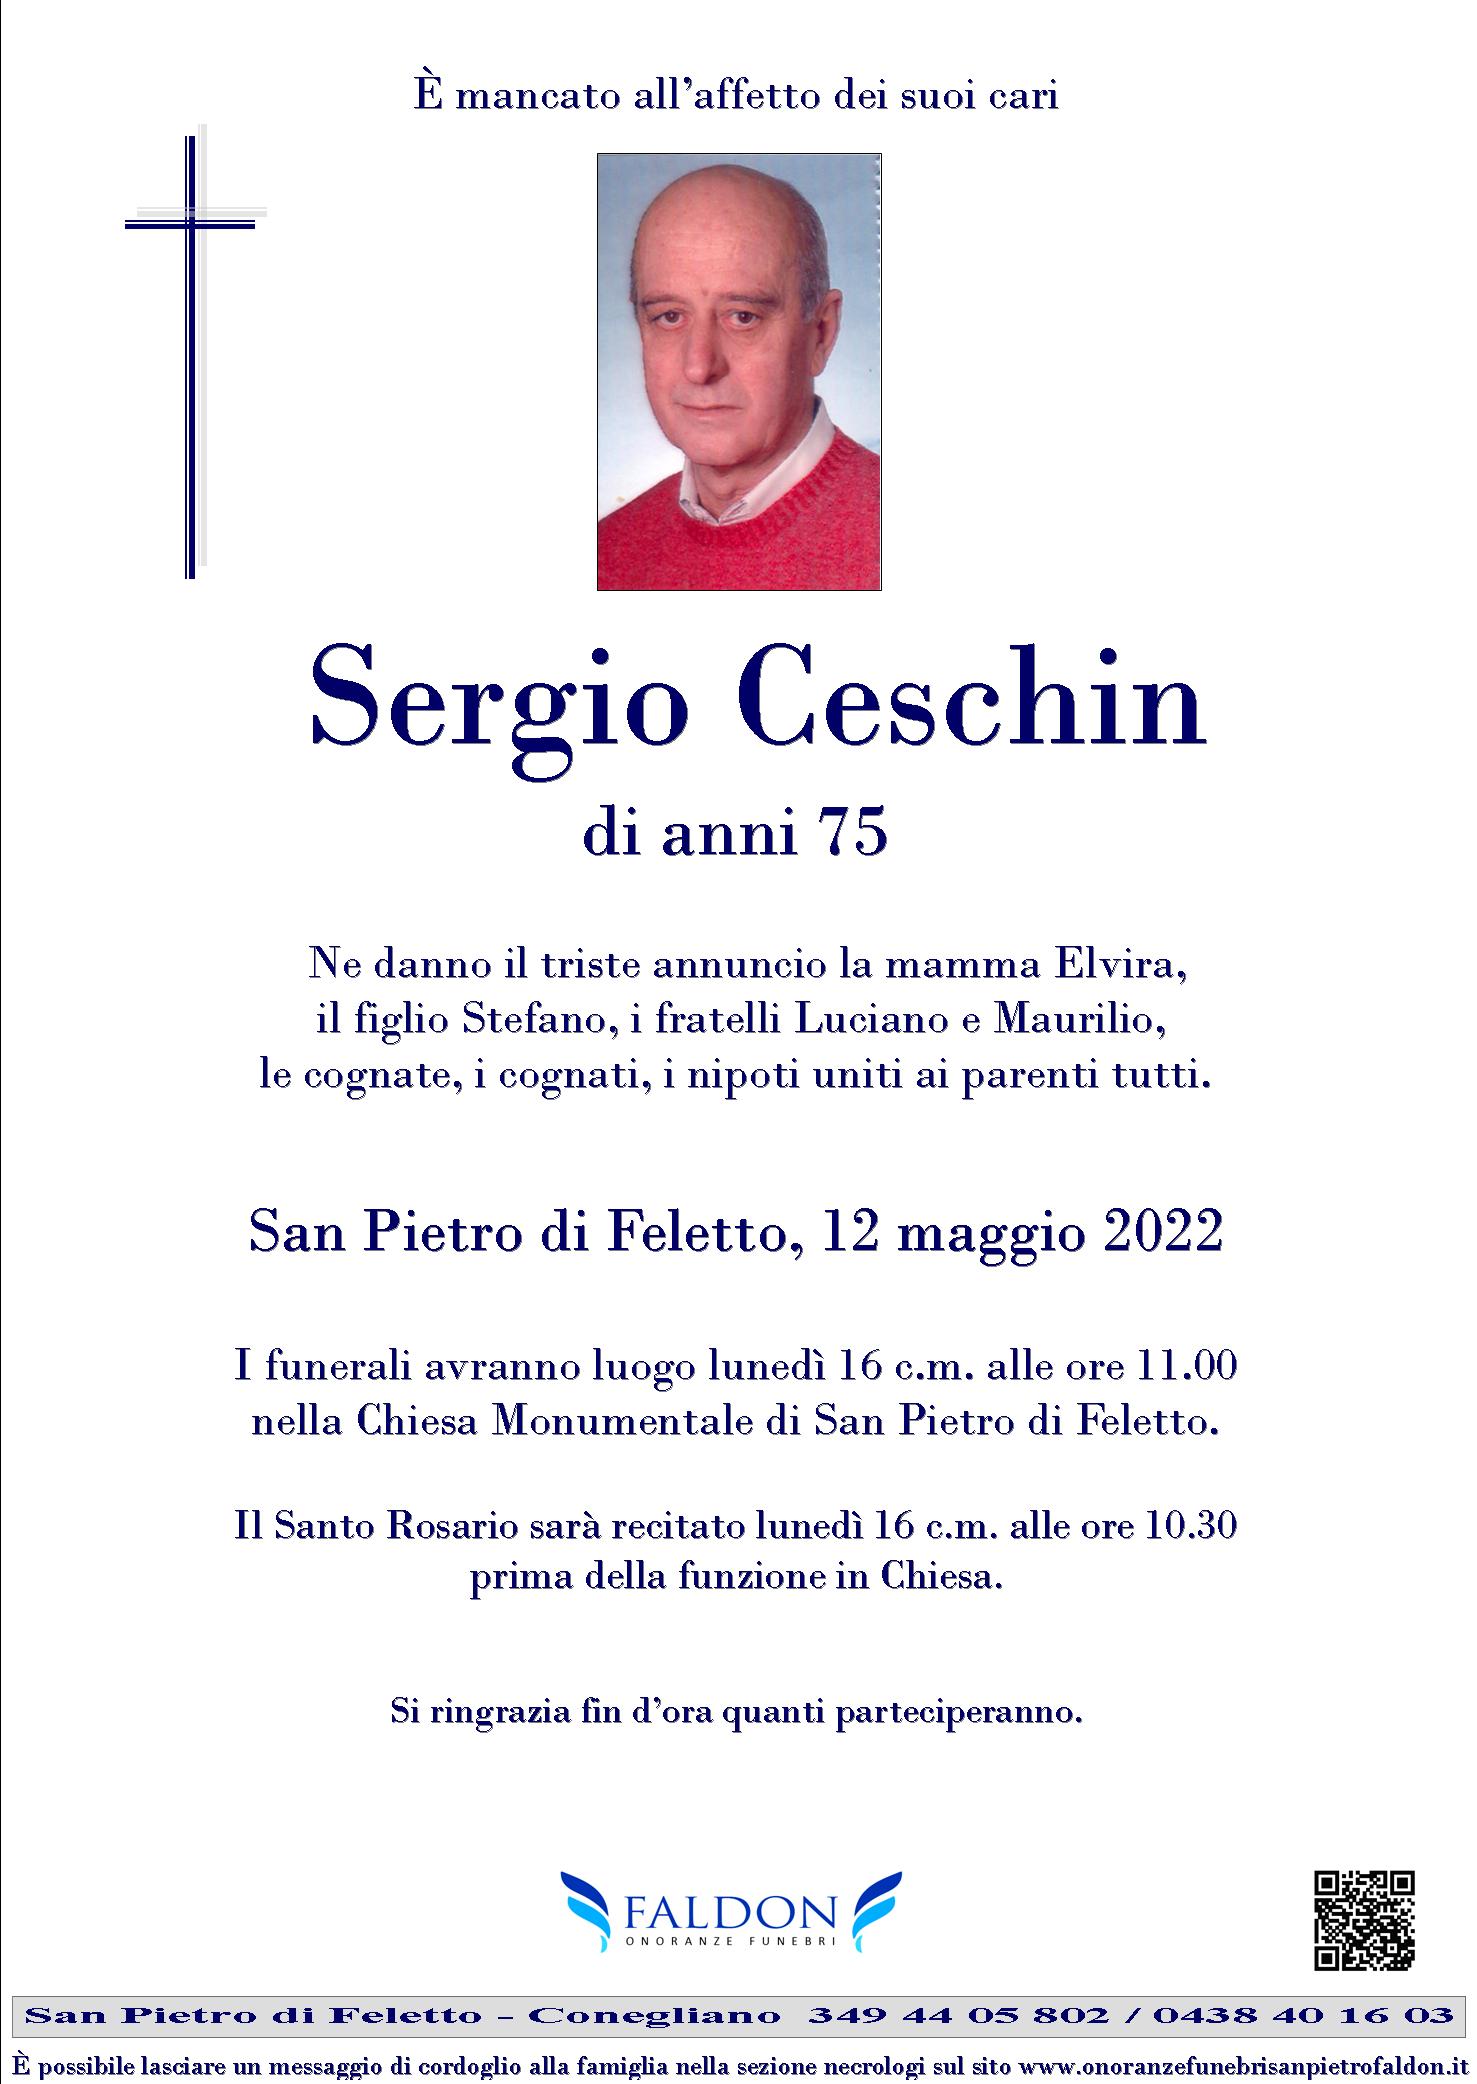 Sergio Ceschin